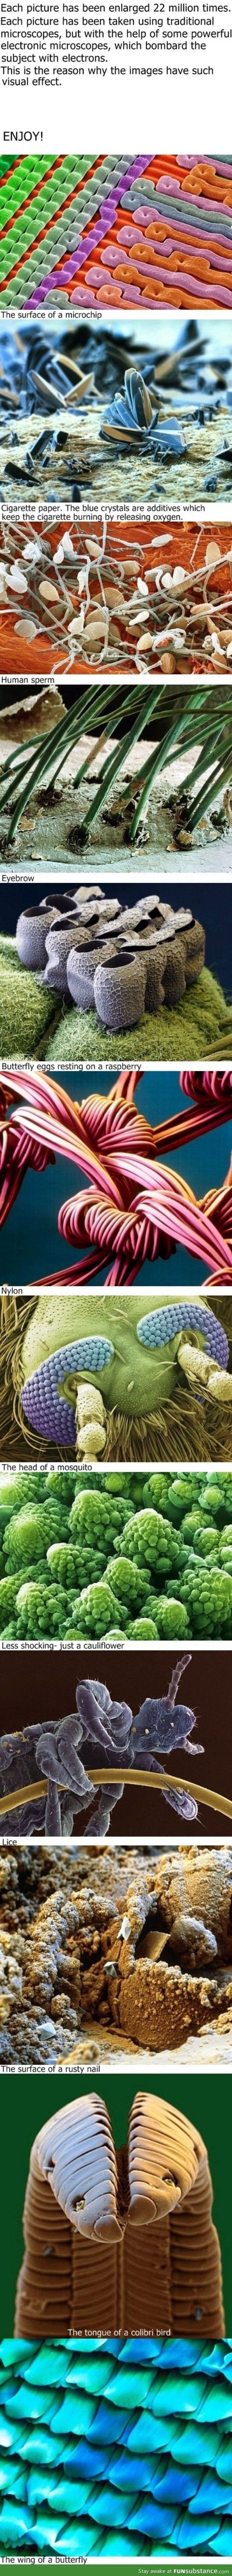 Microscopic images